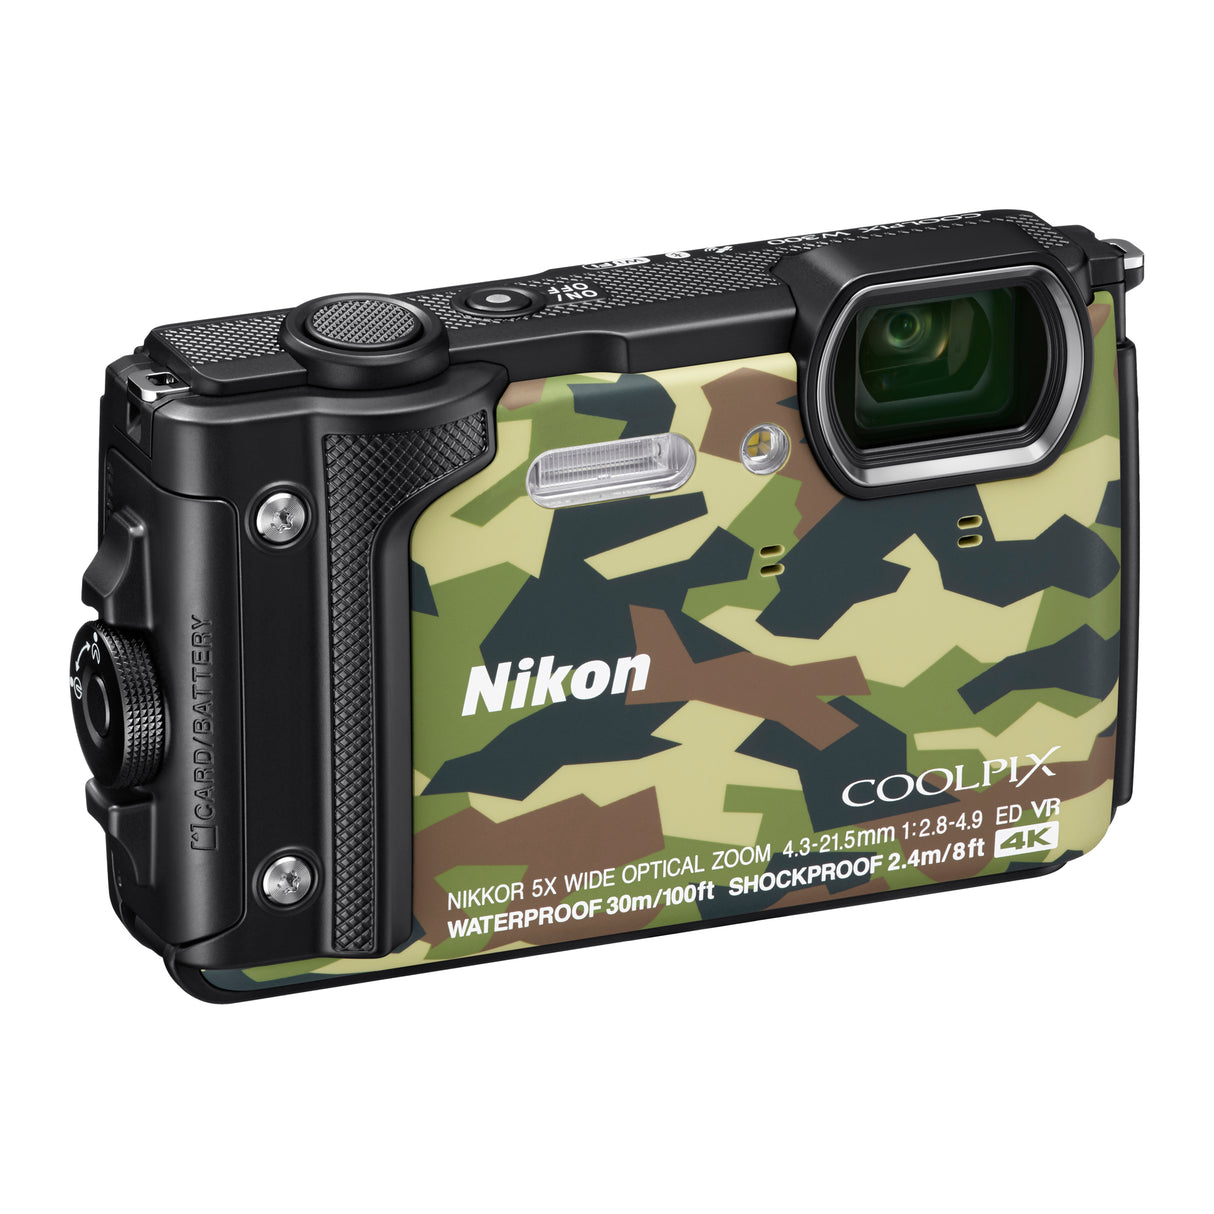 Nikon COOLPIX W300 Point & Shoot Camera